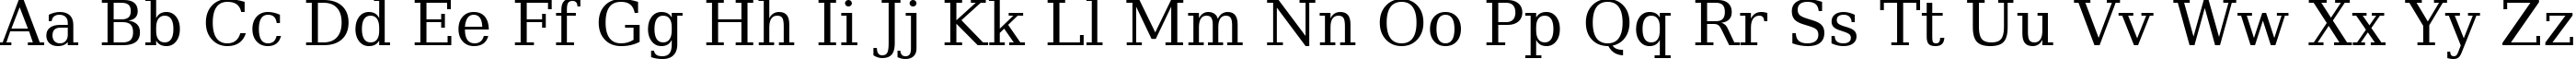 Пример написания английского алфавита шрифтом ae_Hani